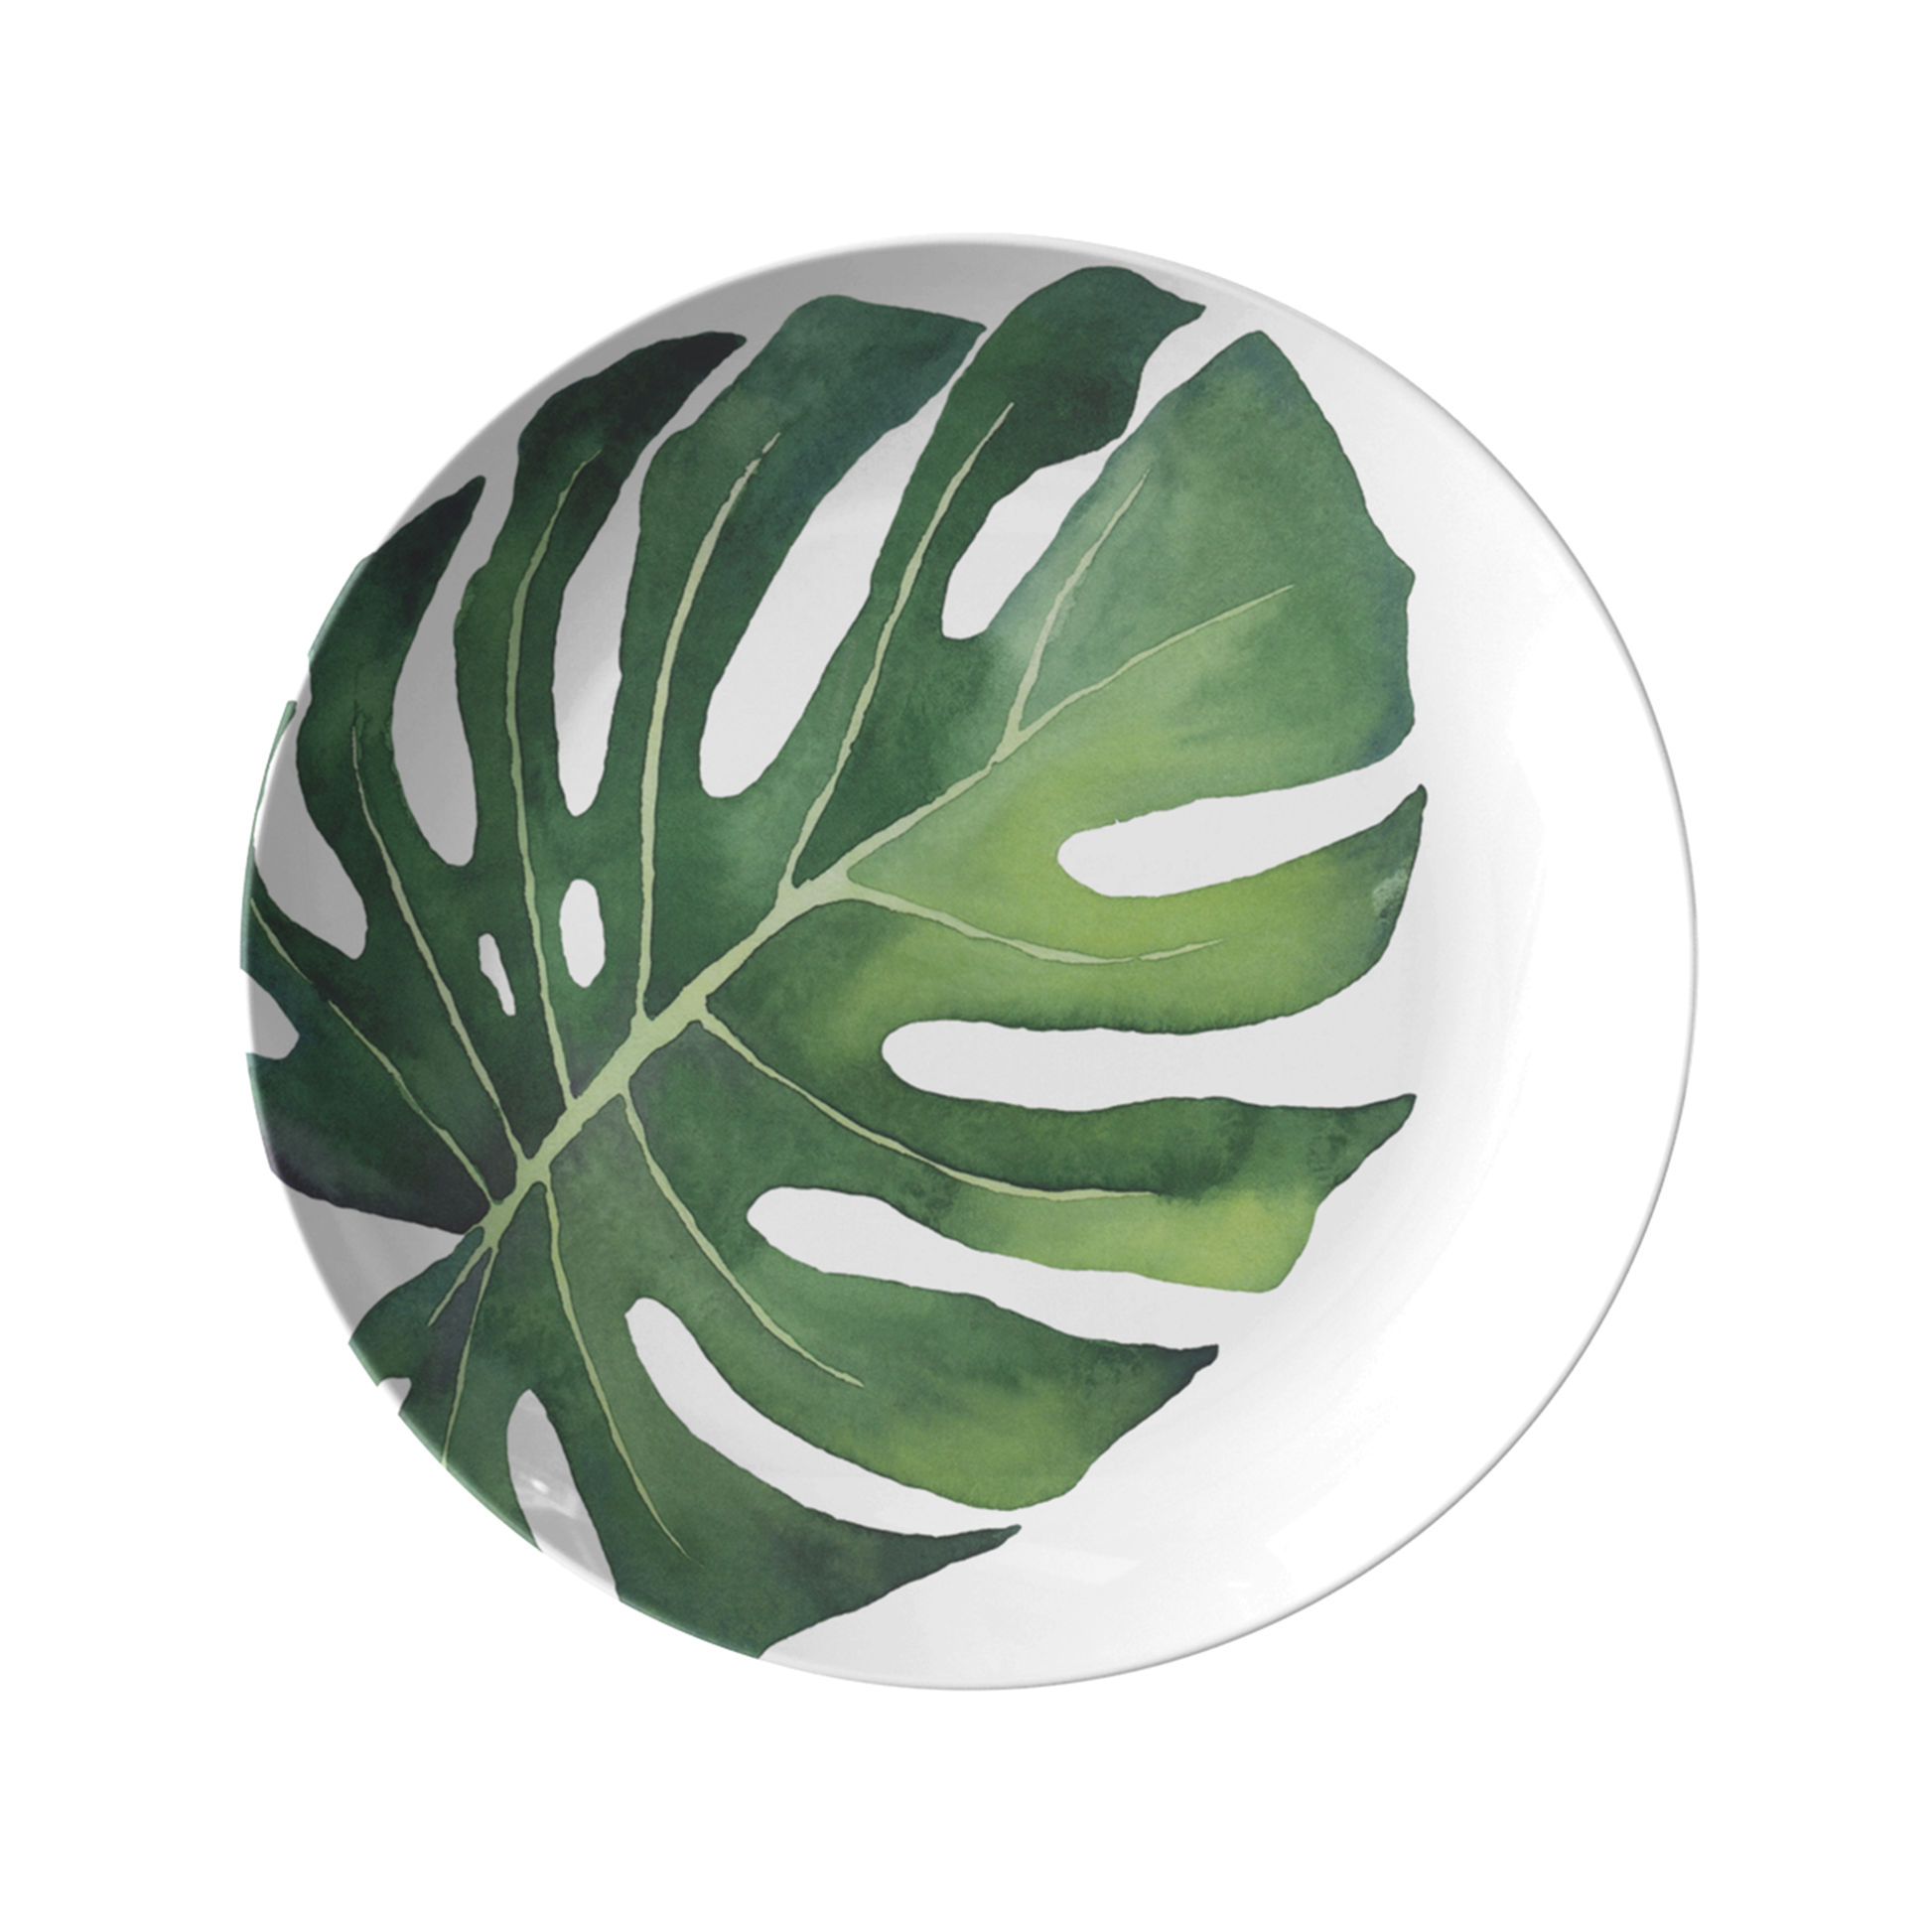 Melamine like plastic plate with modern monstera leaf print.